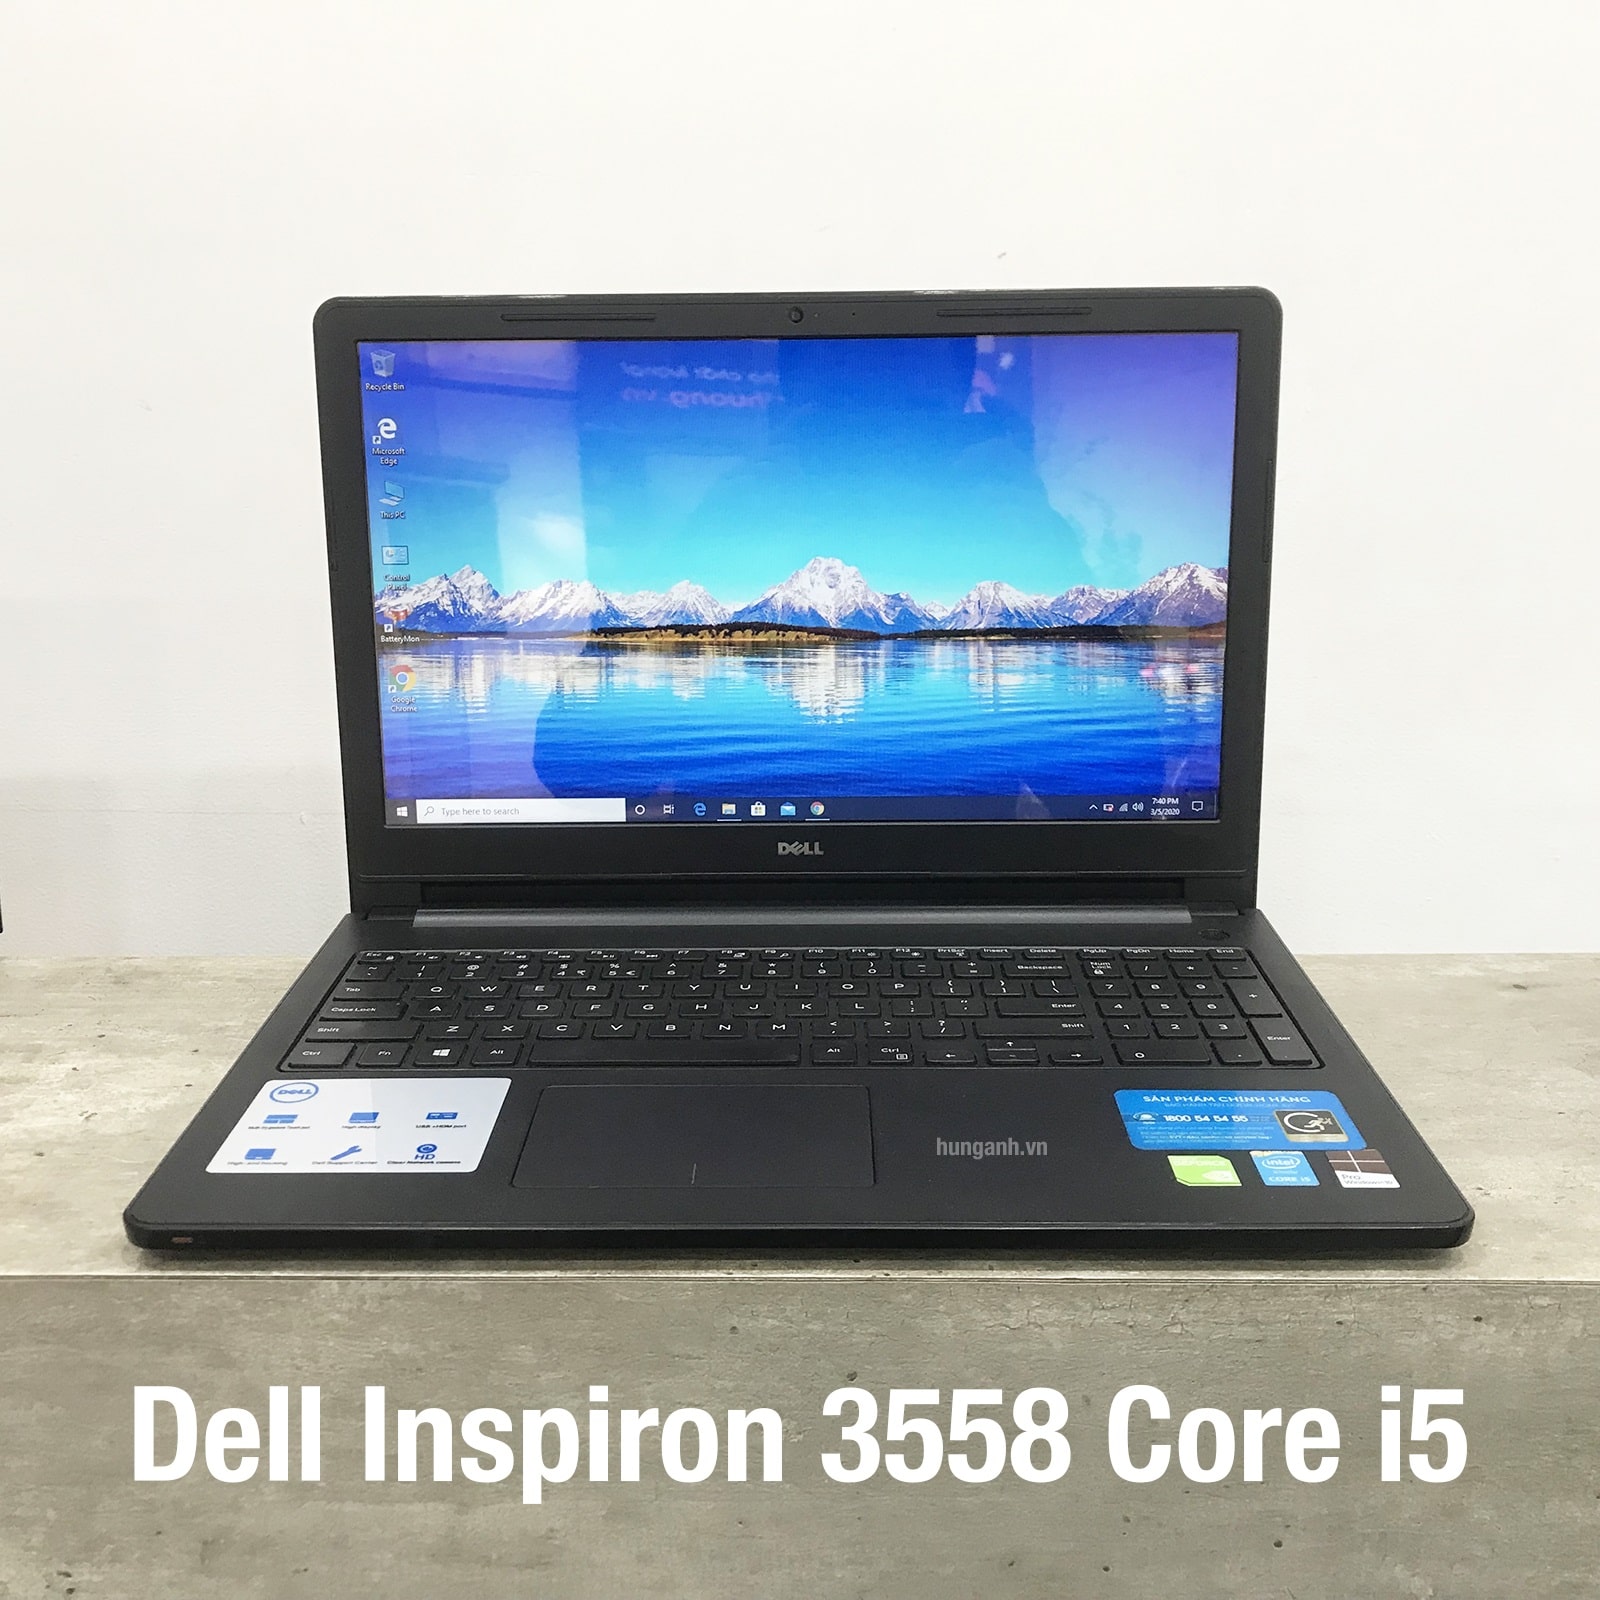 Dell Inspiron 3558 Core i5 5200U, Ram 4GB, HDD 500GB, NVIDIA 820M, 15.6 inch